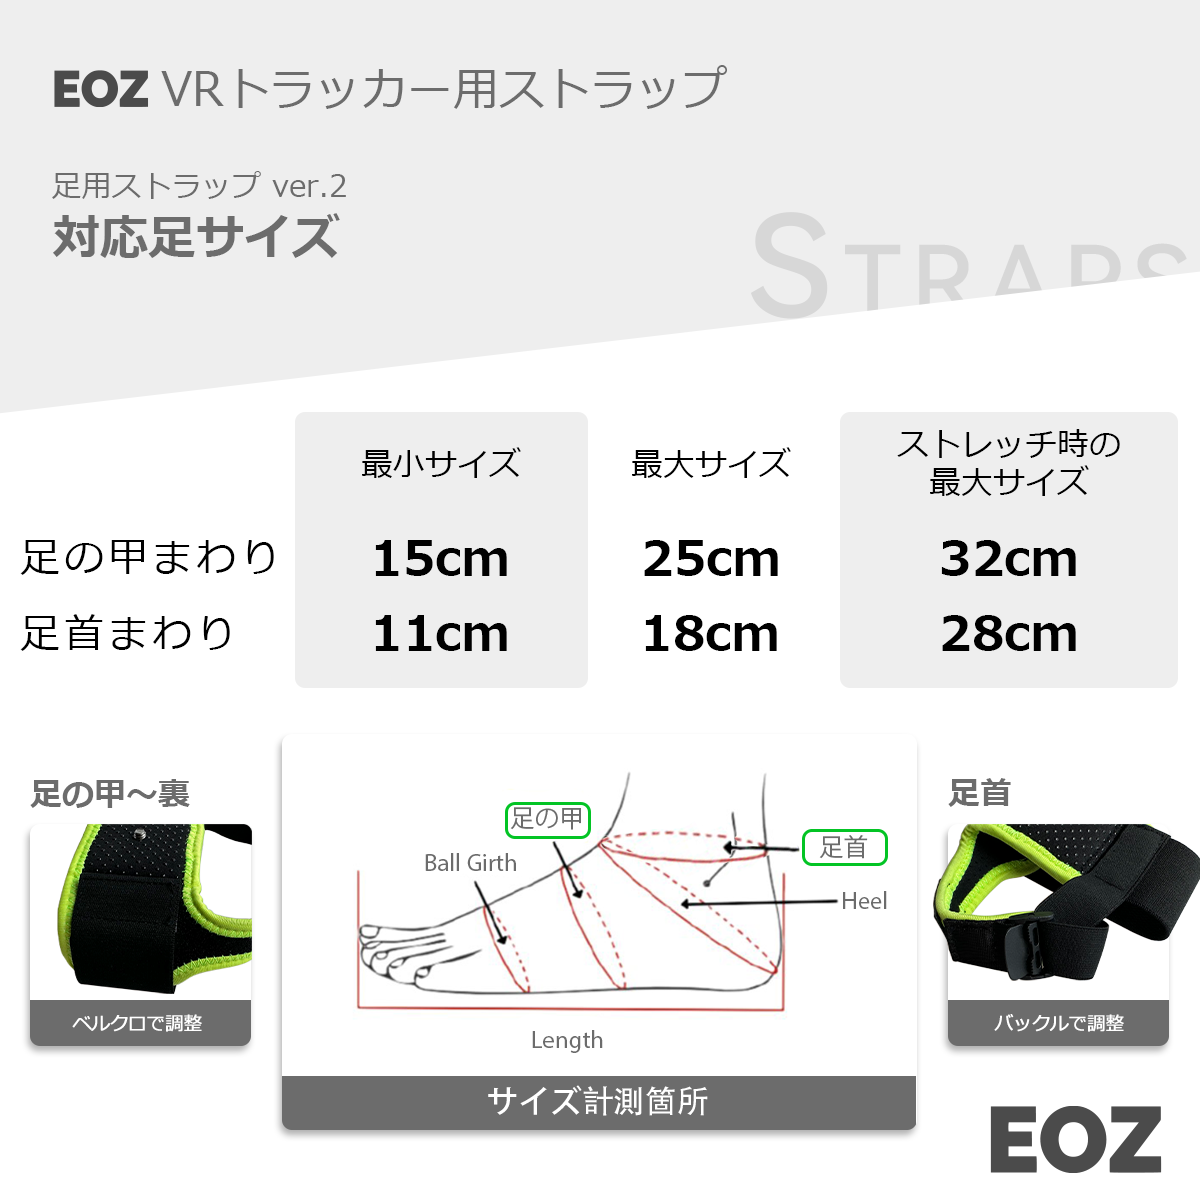 EoZ VRトラッカー用ストラップ 足用 ver.2